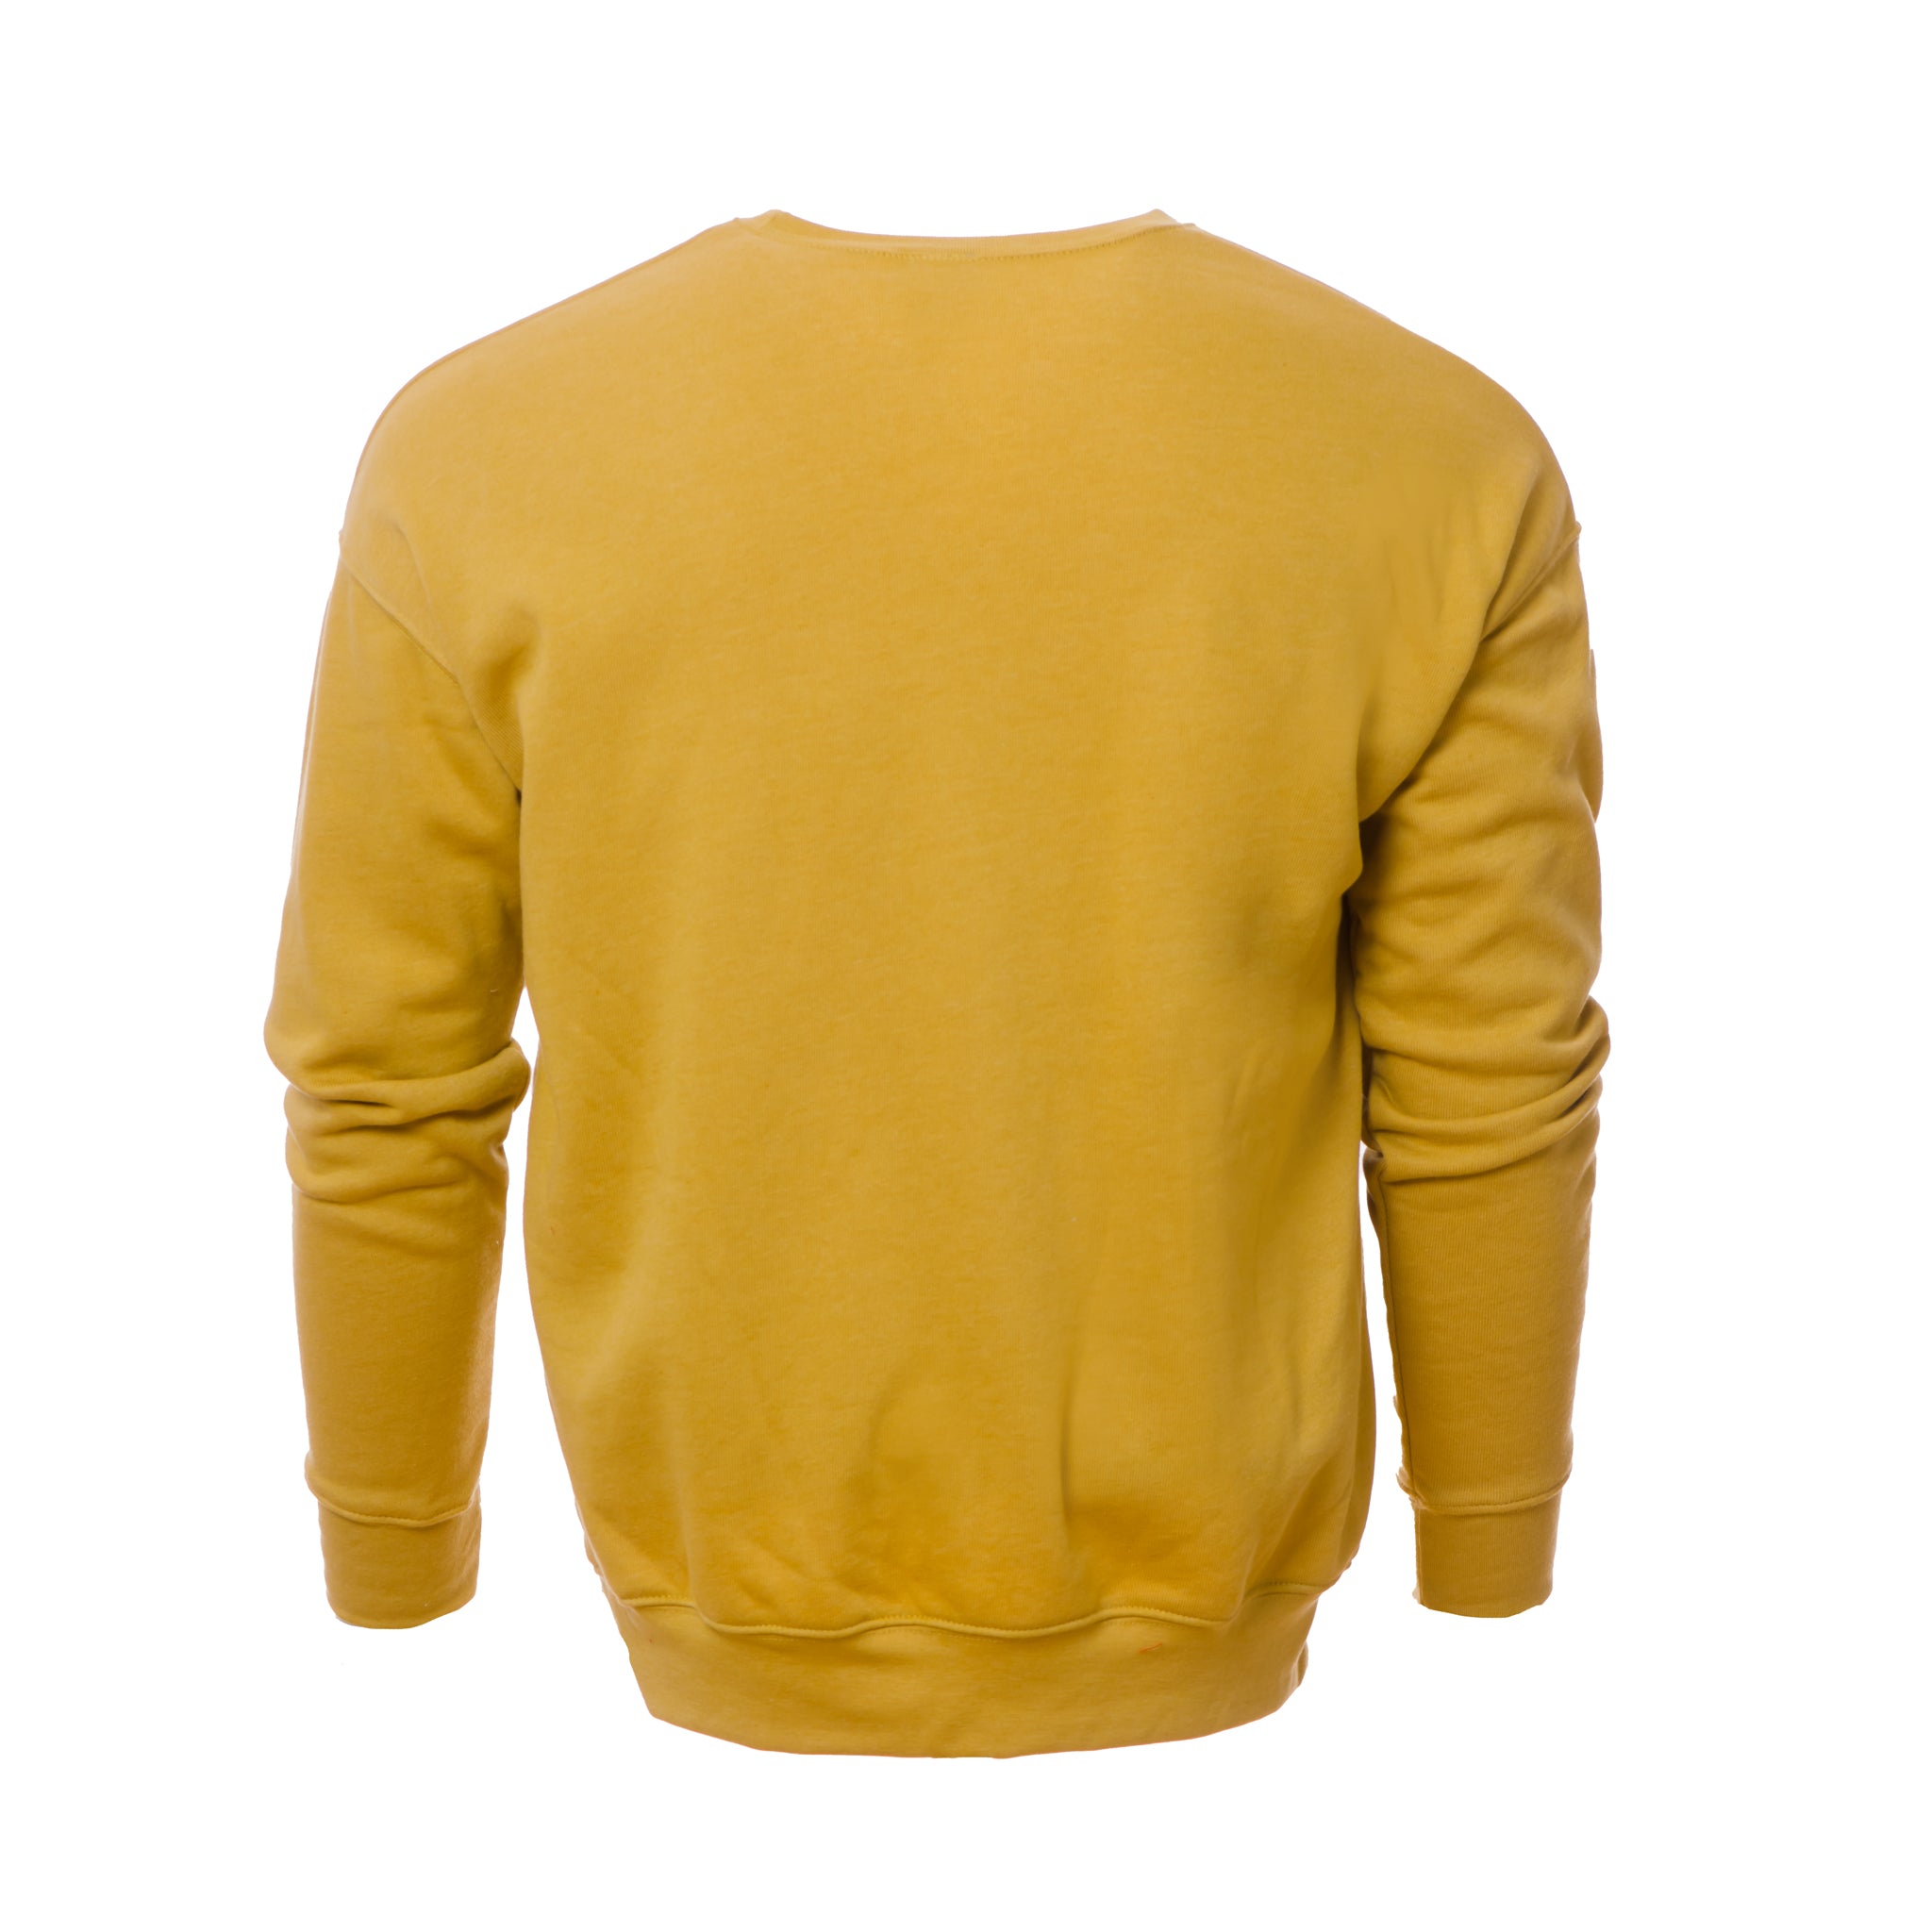 miller-lite-gold-embroidered-sweatshirt-miller-lite-shop